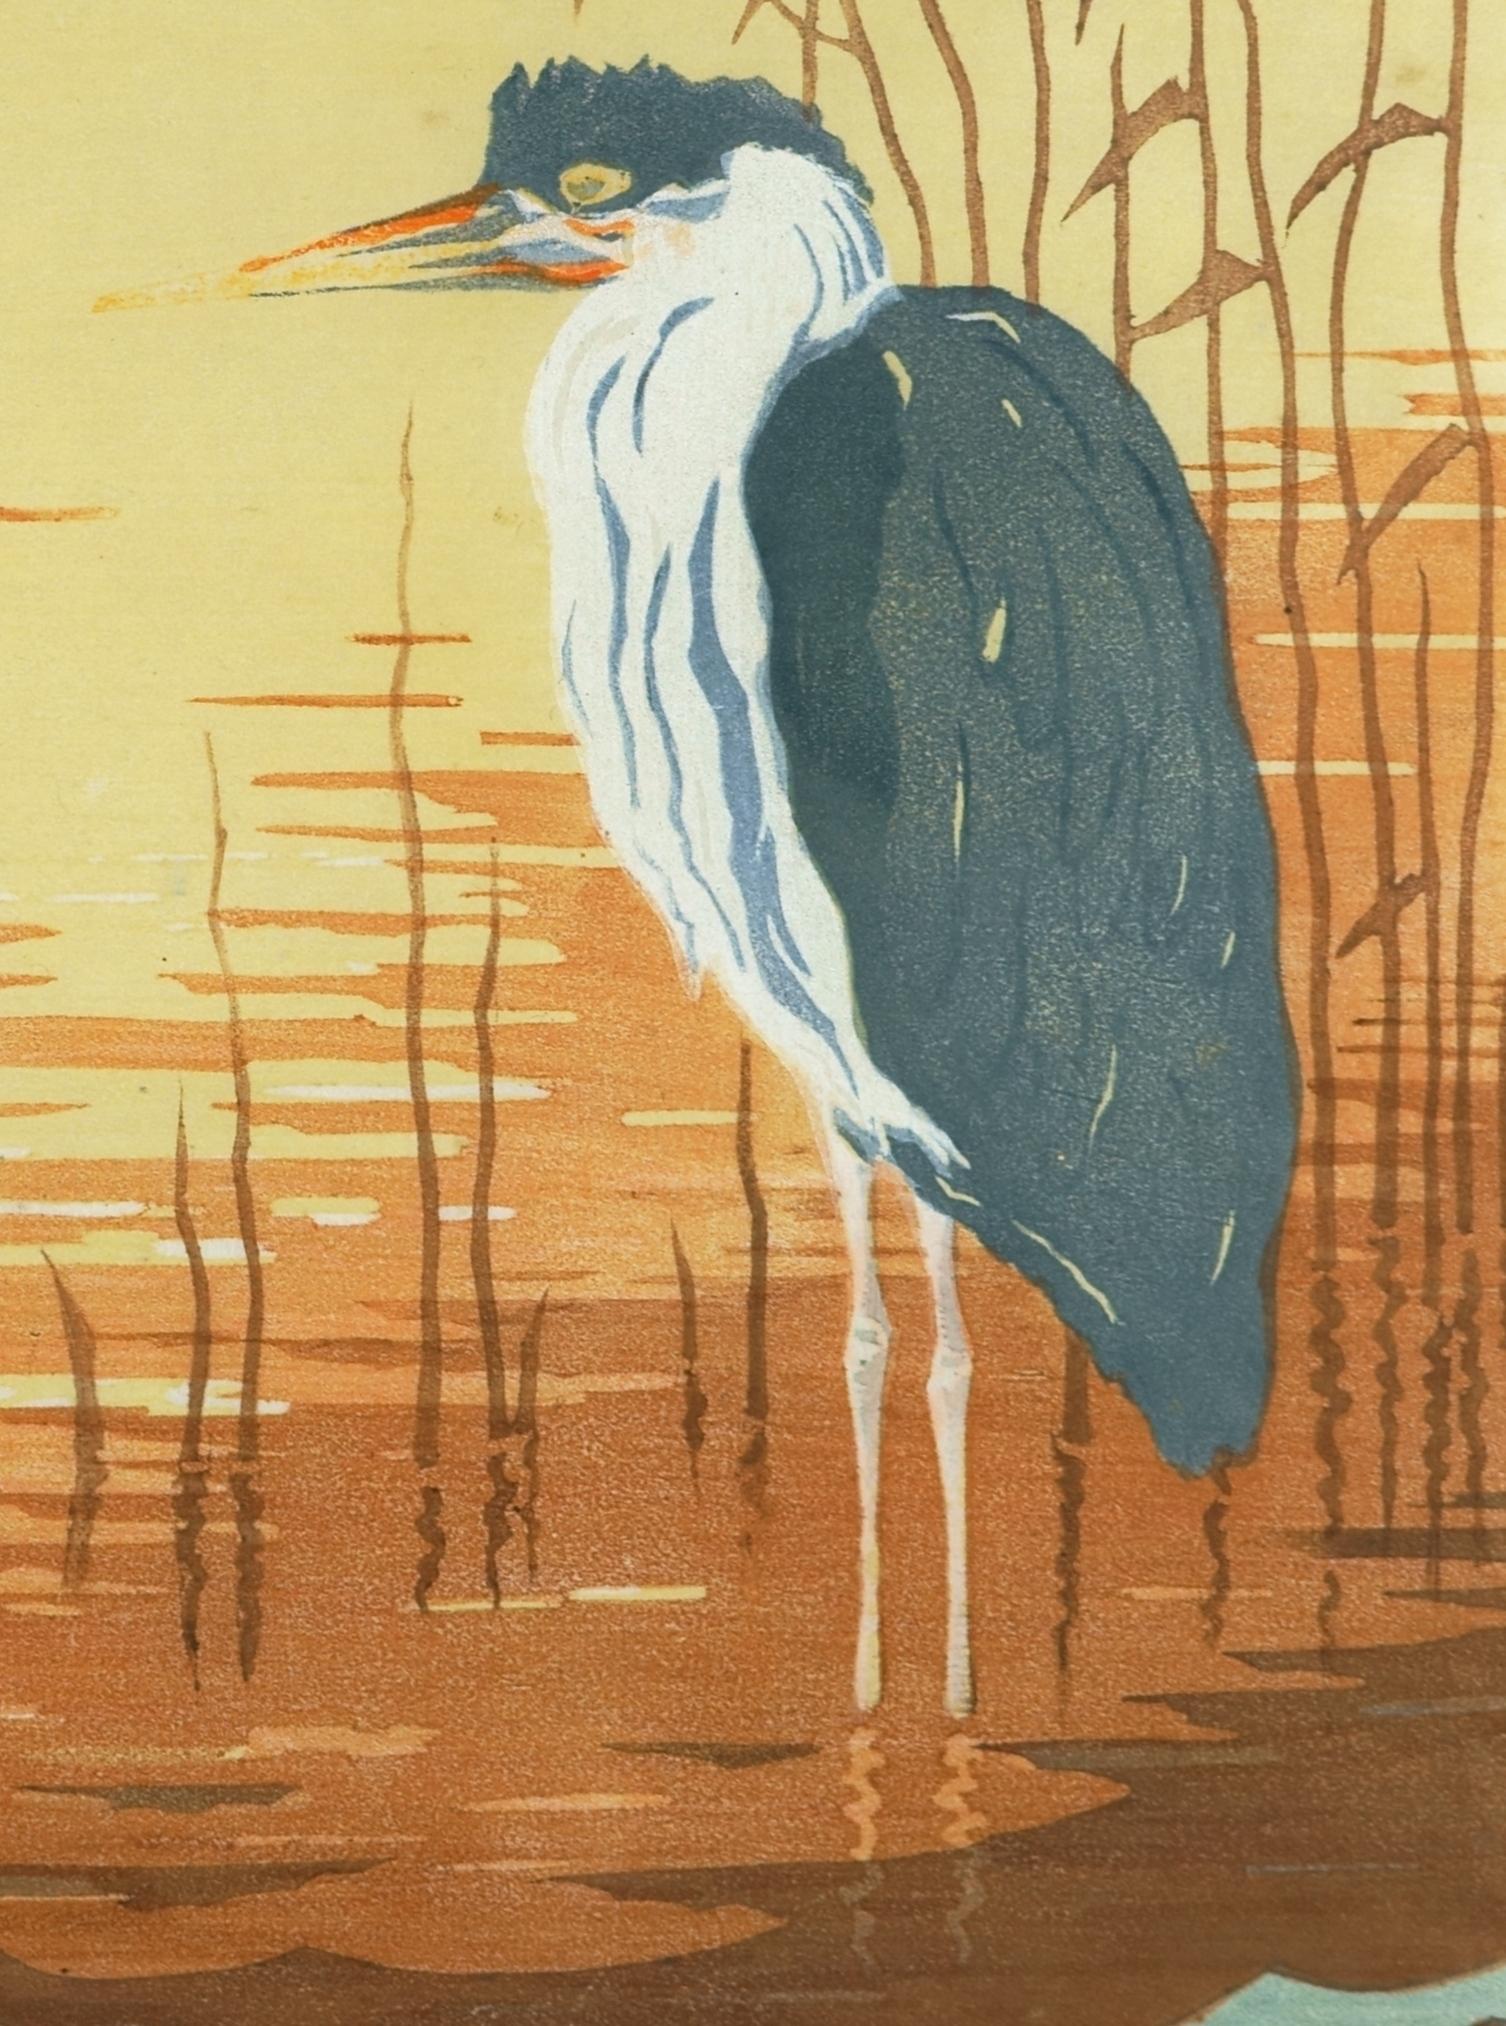 Three Herons - At the flaming lake - - Print by Rudolf Hayder